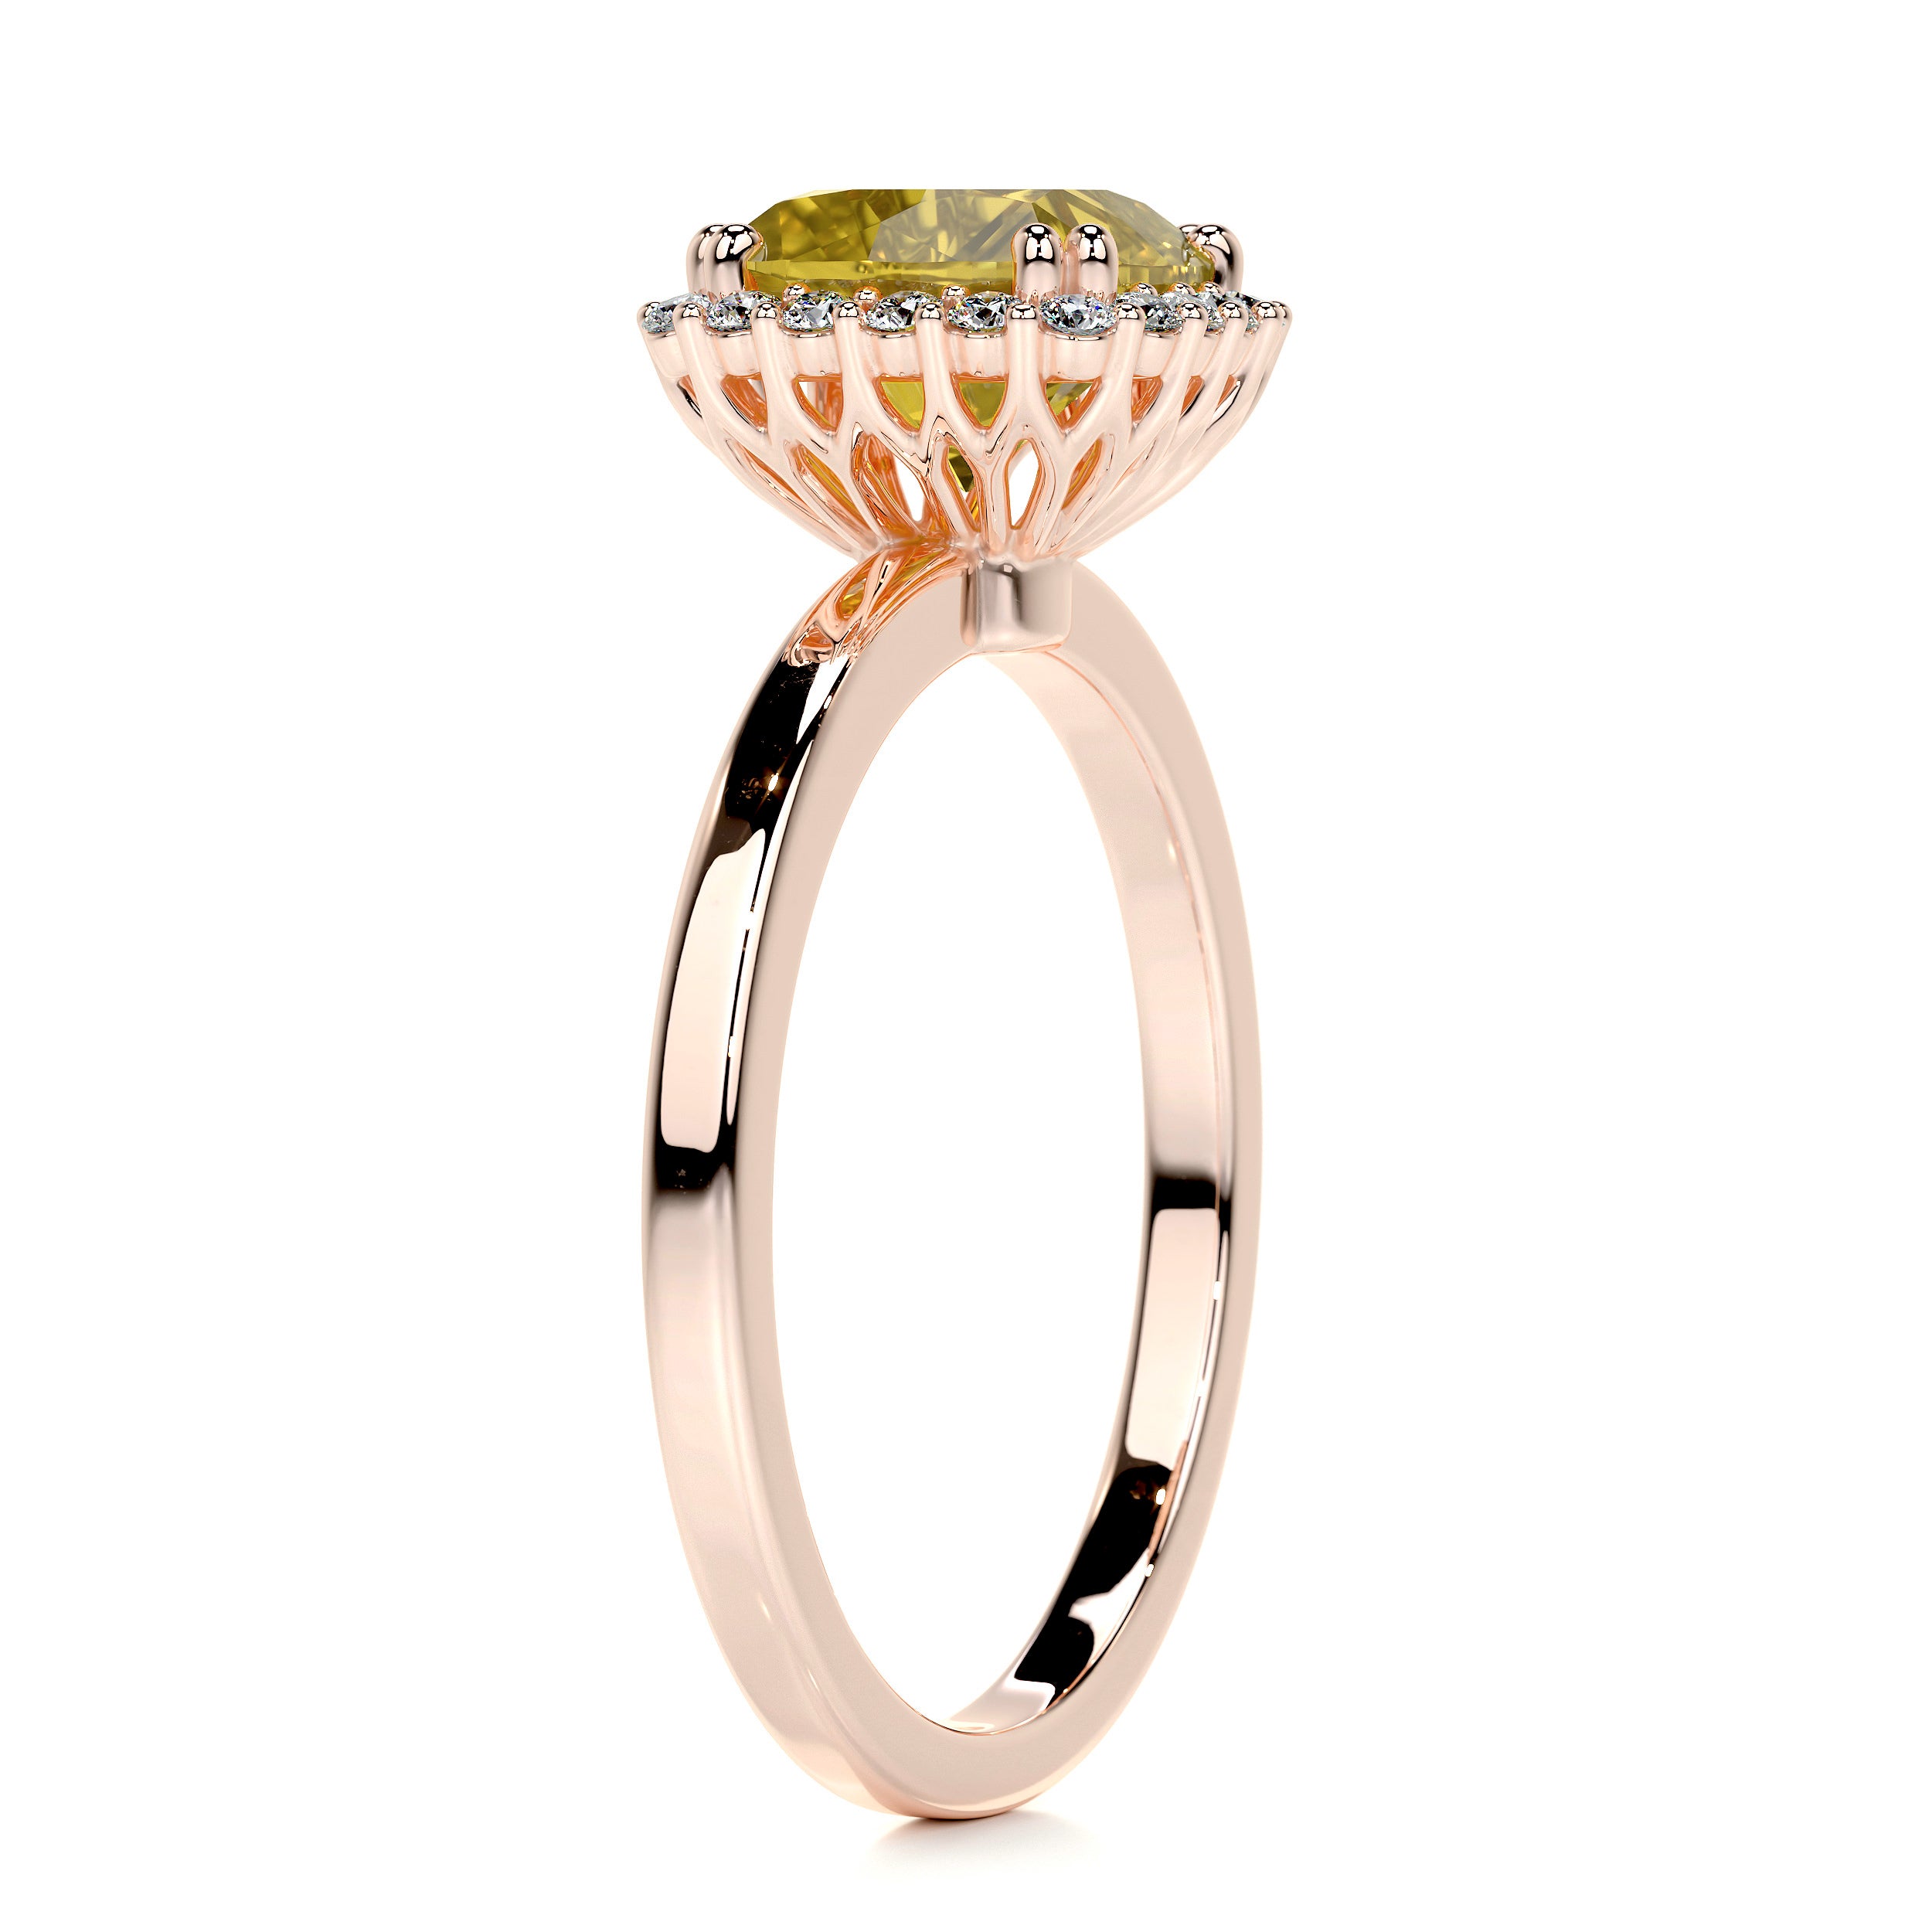 Emery Diamond Engagement Ring   (1.8 Carat) - 14K Rose Gold